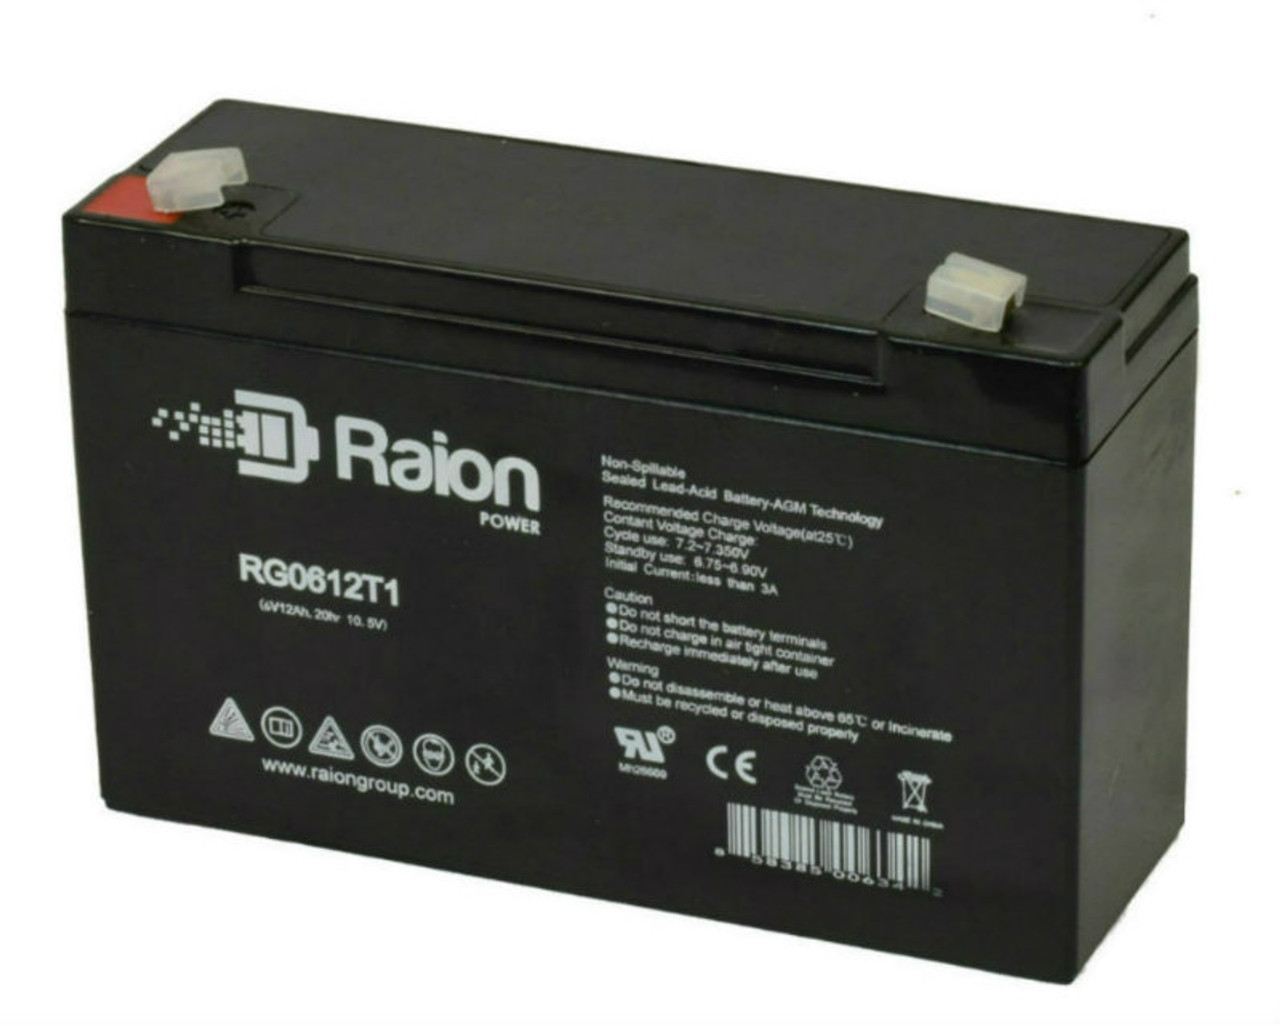 Raion Power RG06120T1 Replacement 6V 12Ah Emergency Light Battery for High-Lites 39-03